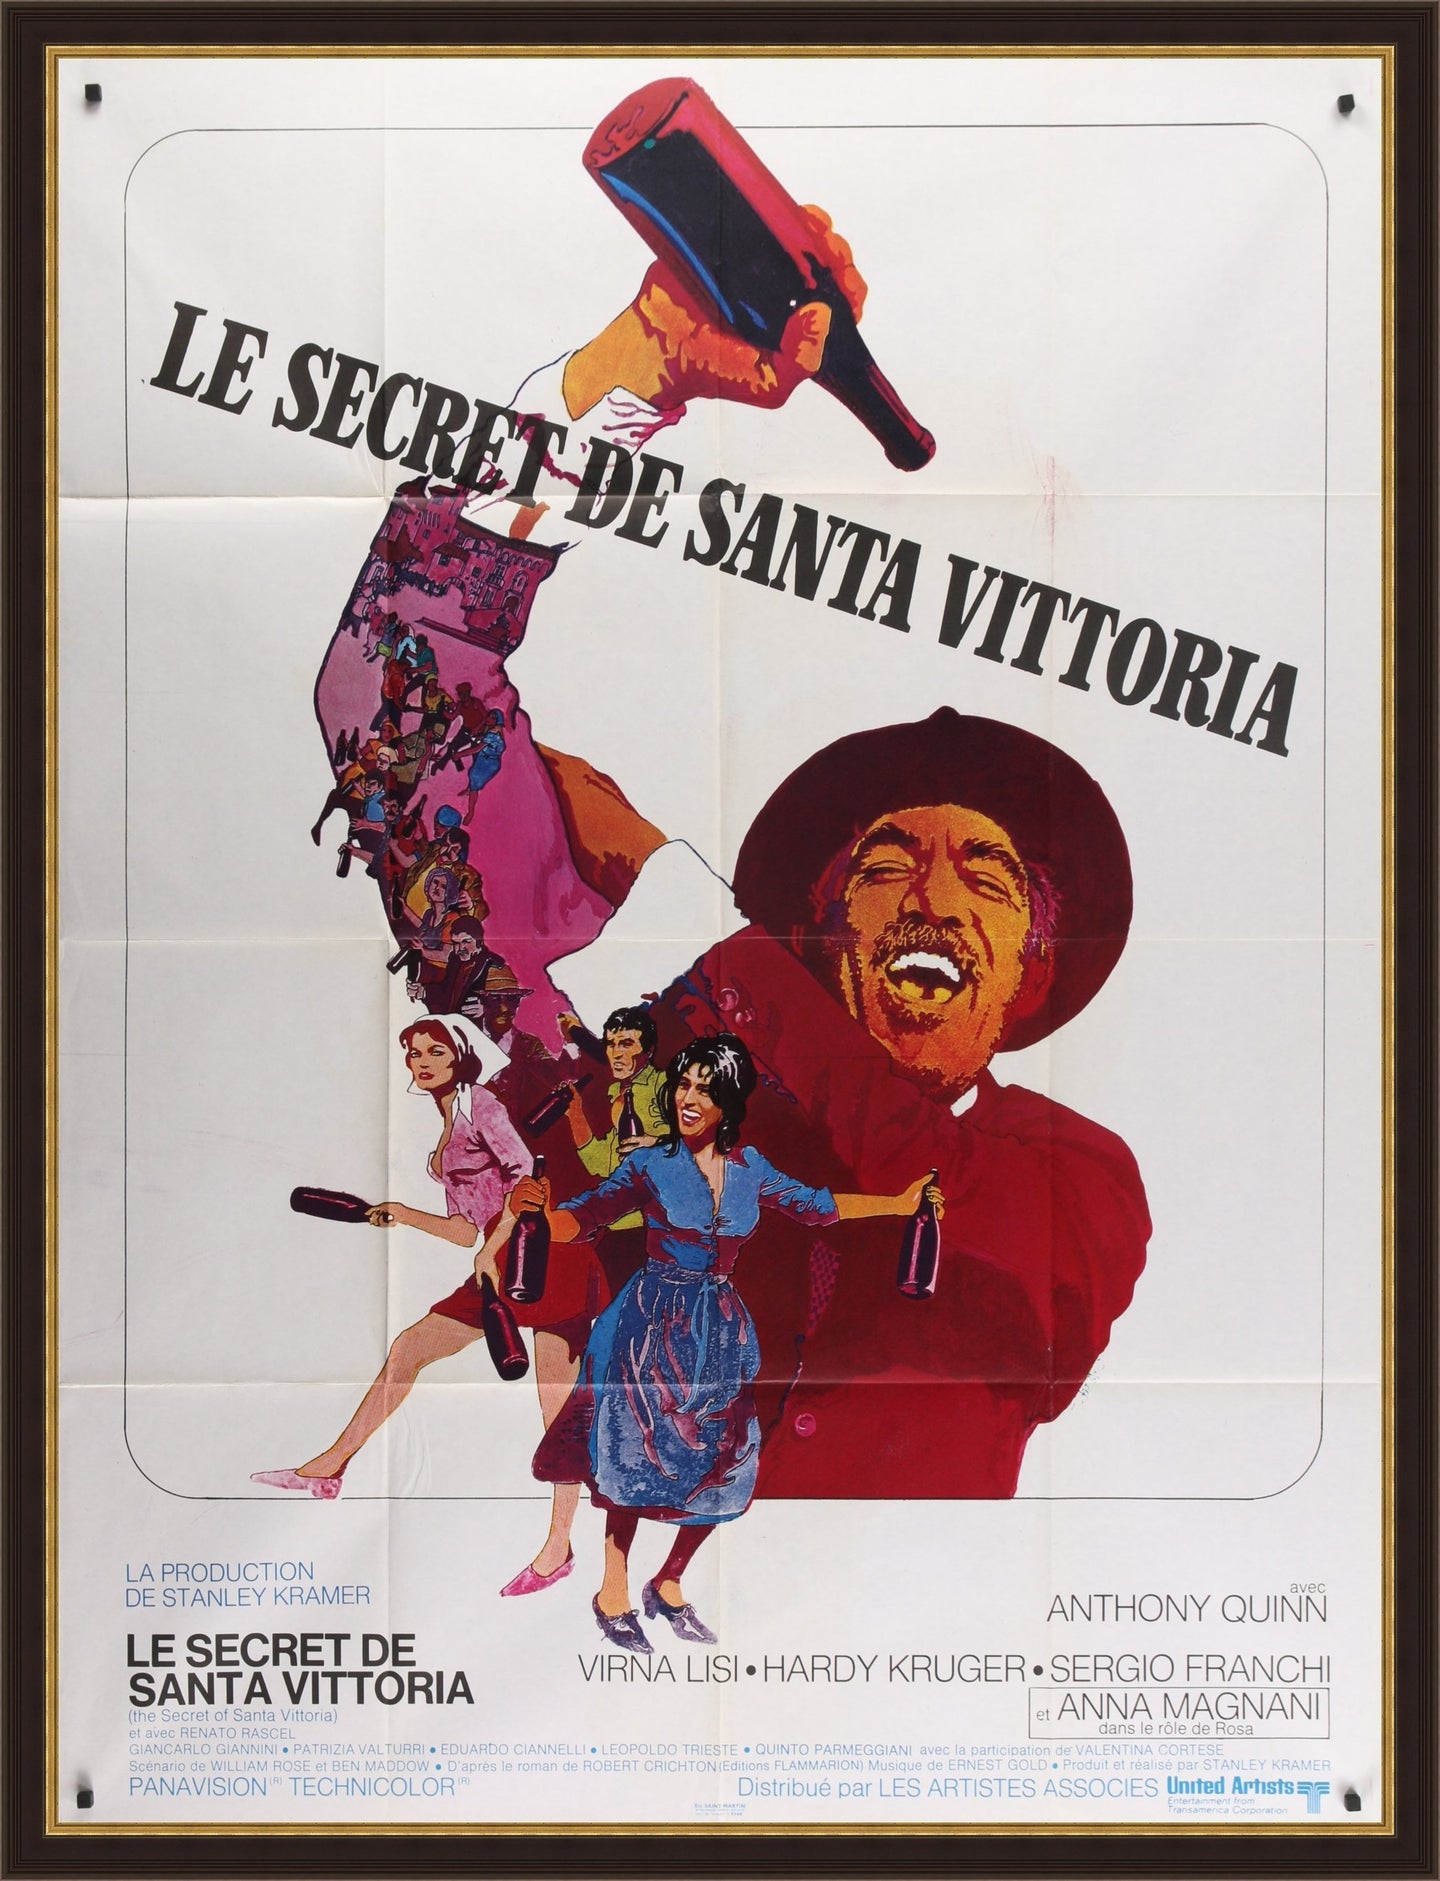 An original movie poster by Bob Peak for the film the Secret of Santa Vittoria